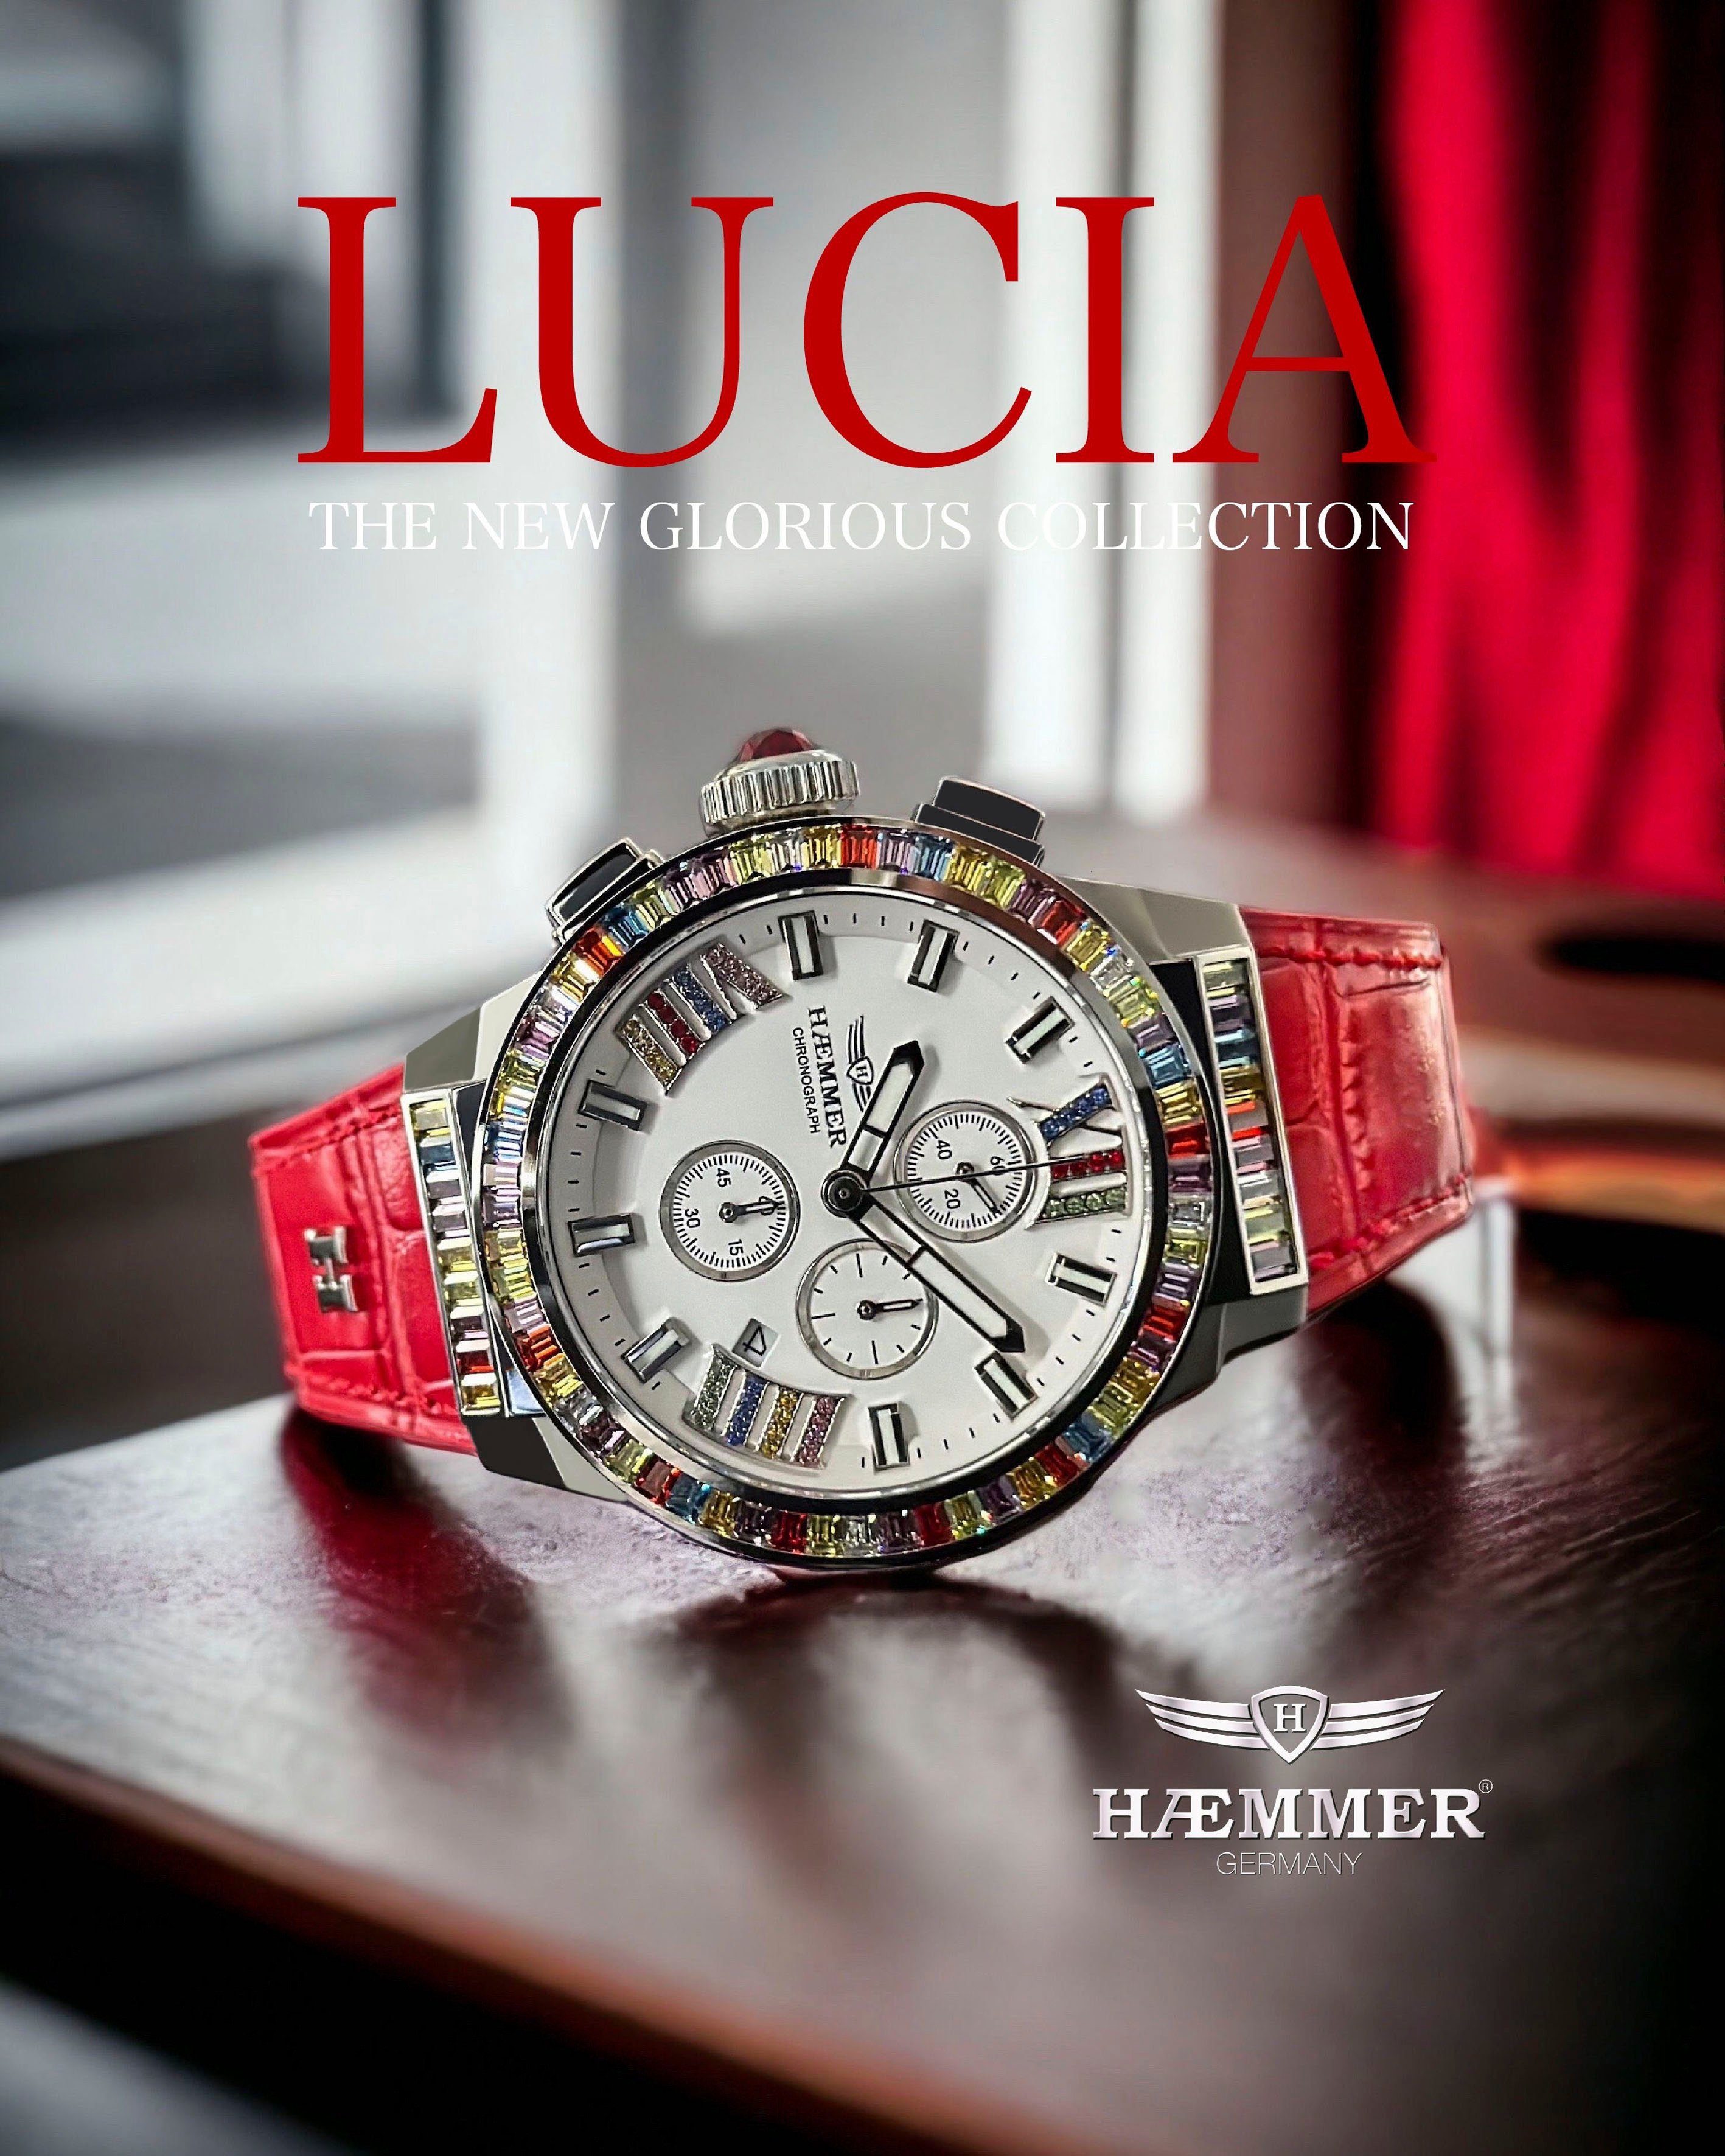 LUCIA, HAEMMER GERMANY GR007 Chronograph